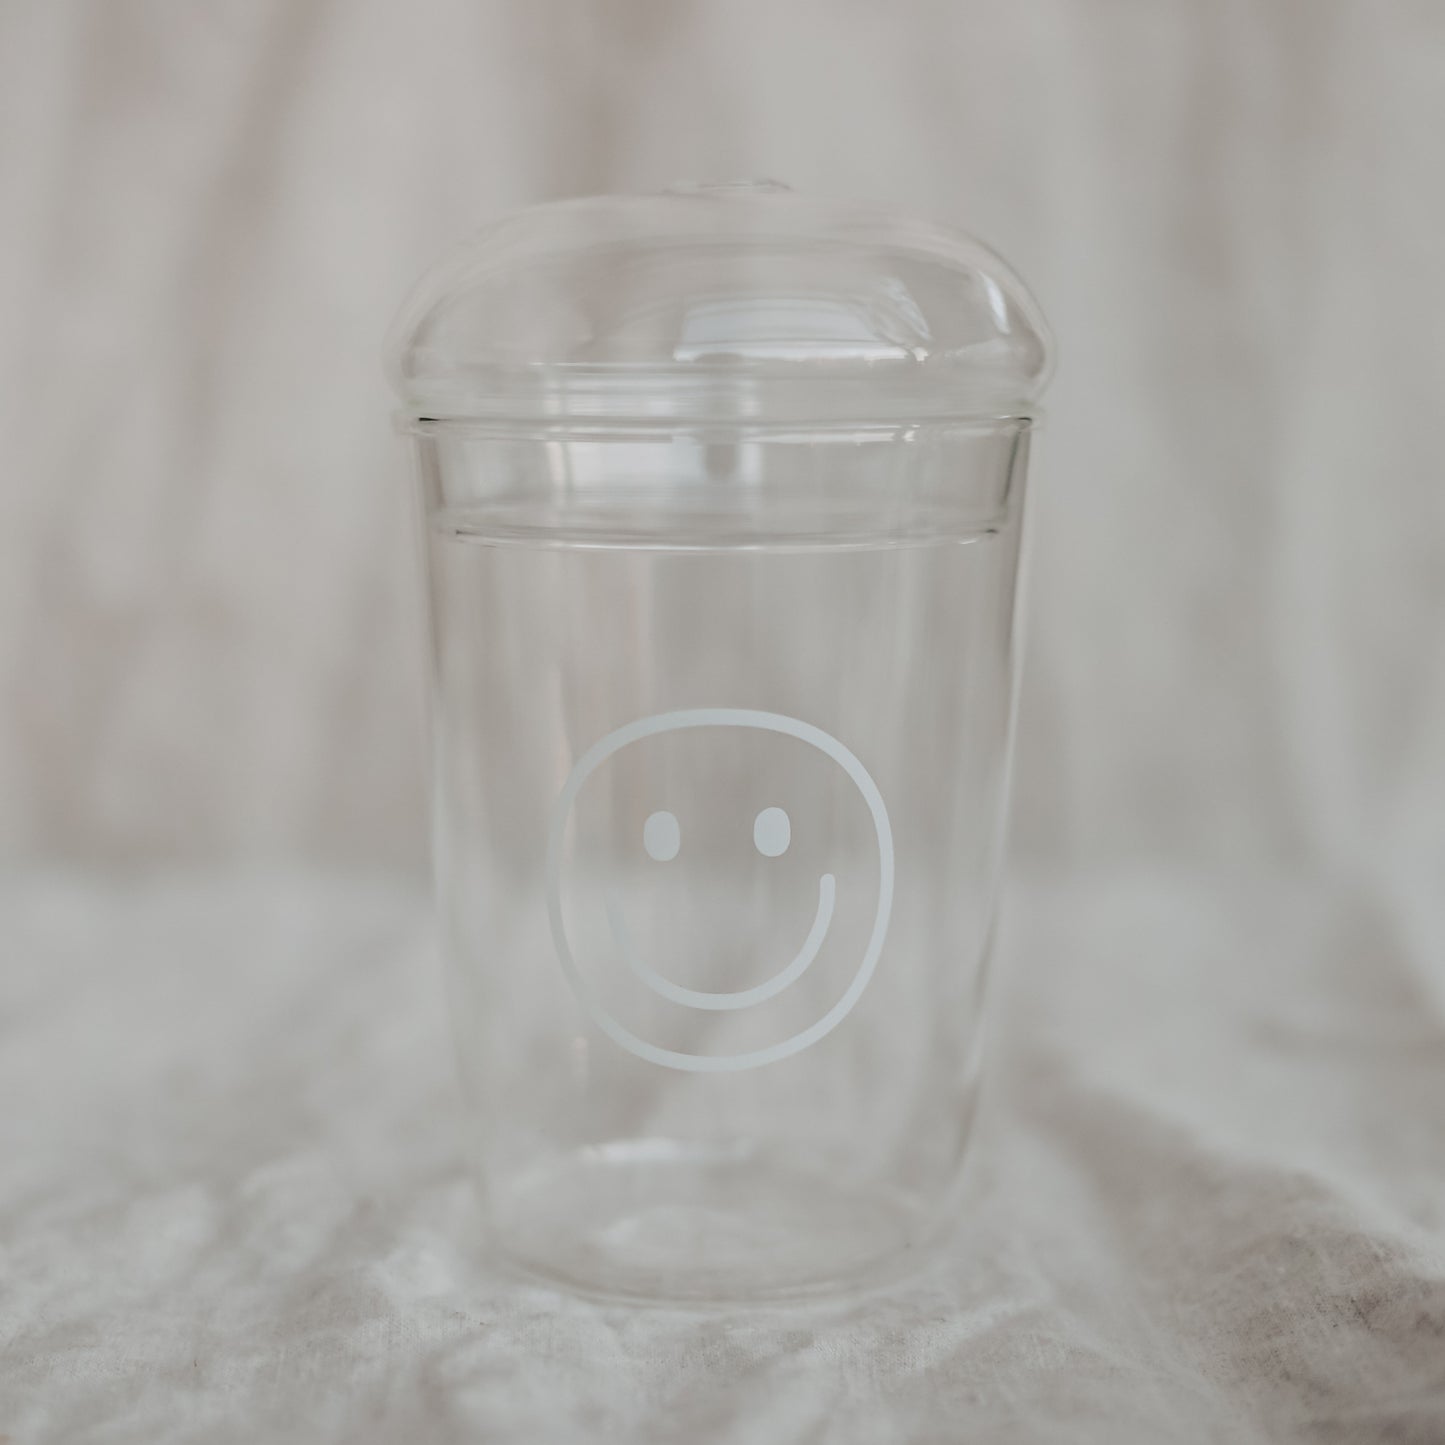 Trinkglas Smiley weiß